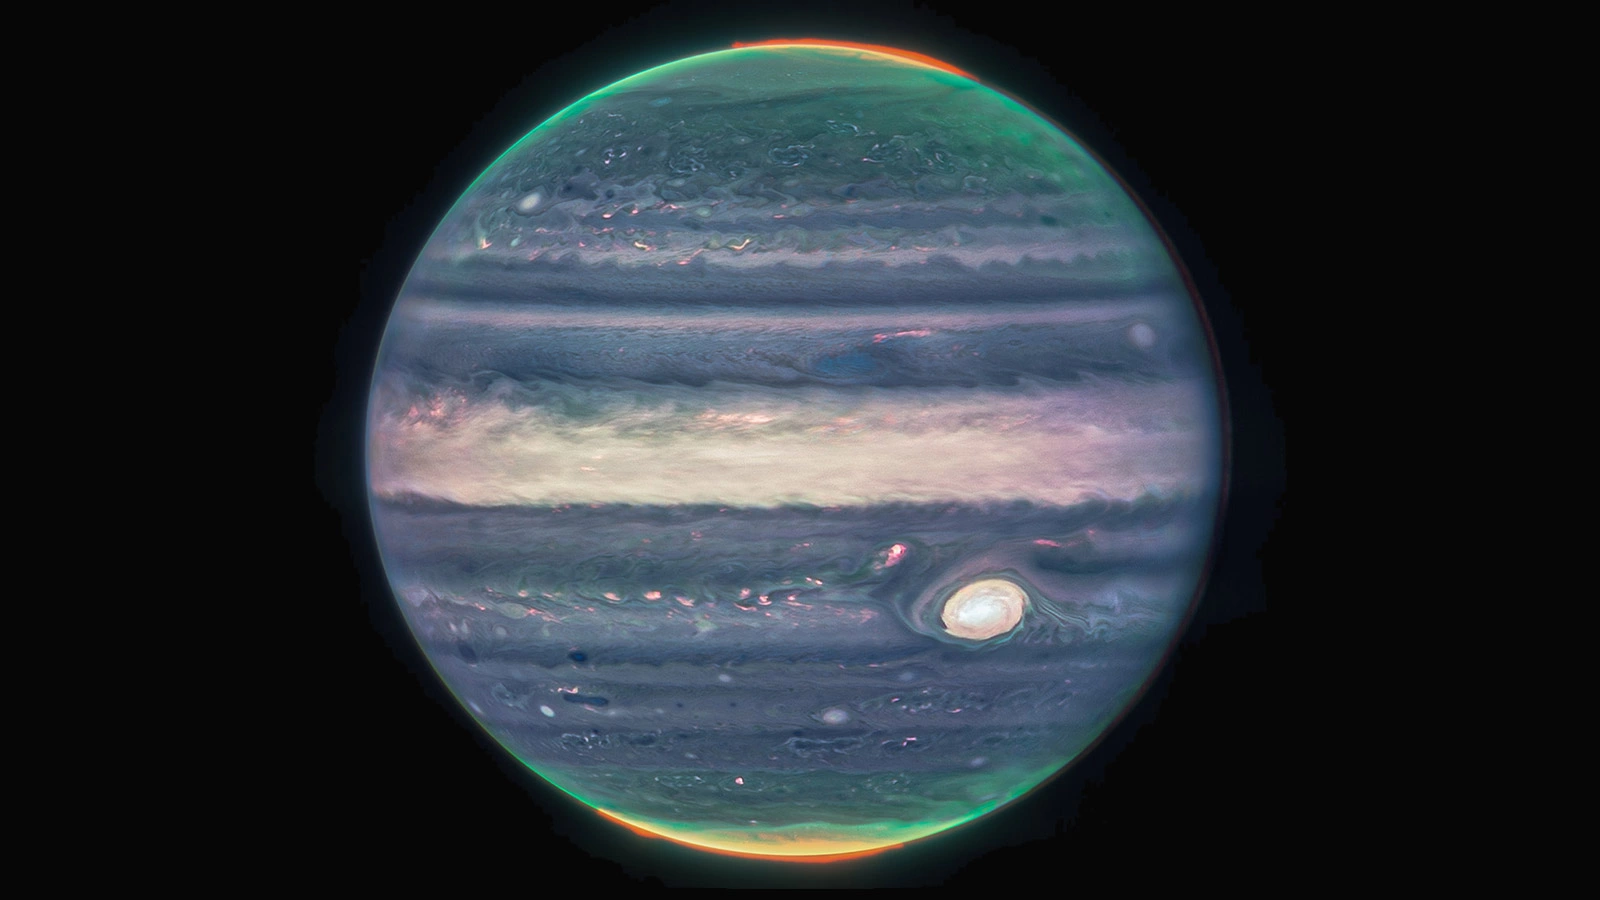 NASA, ESA, CSA, Jupiter ERS Team; image processing by Judy Schmidt.